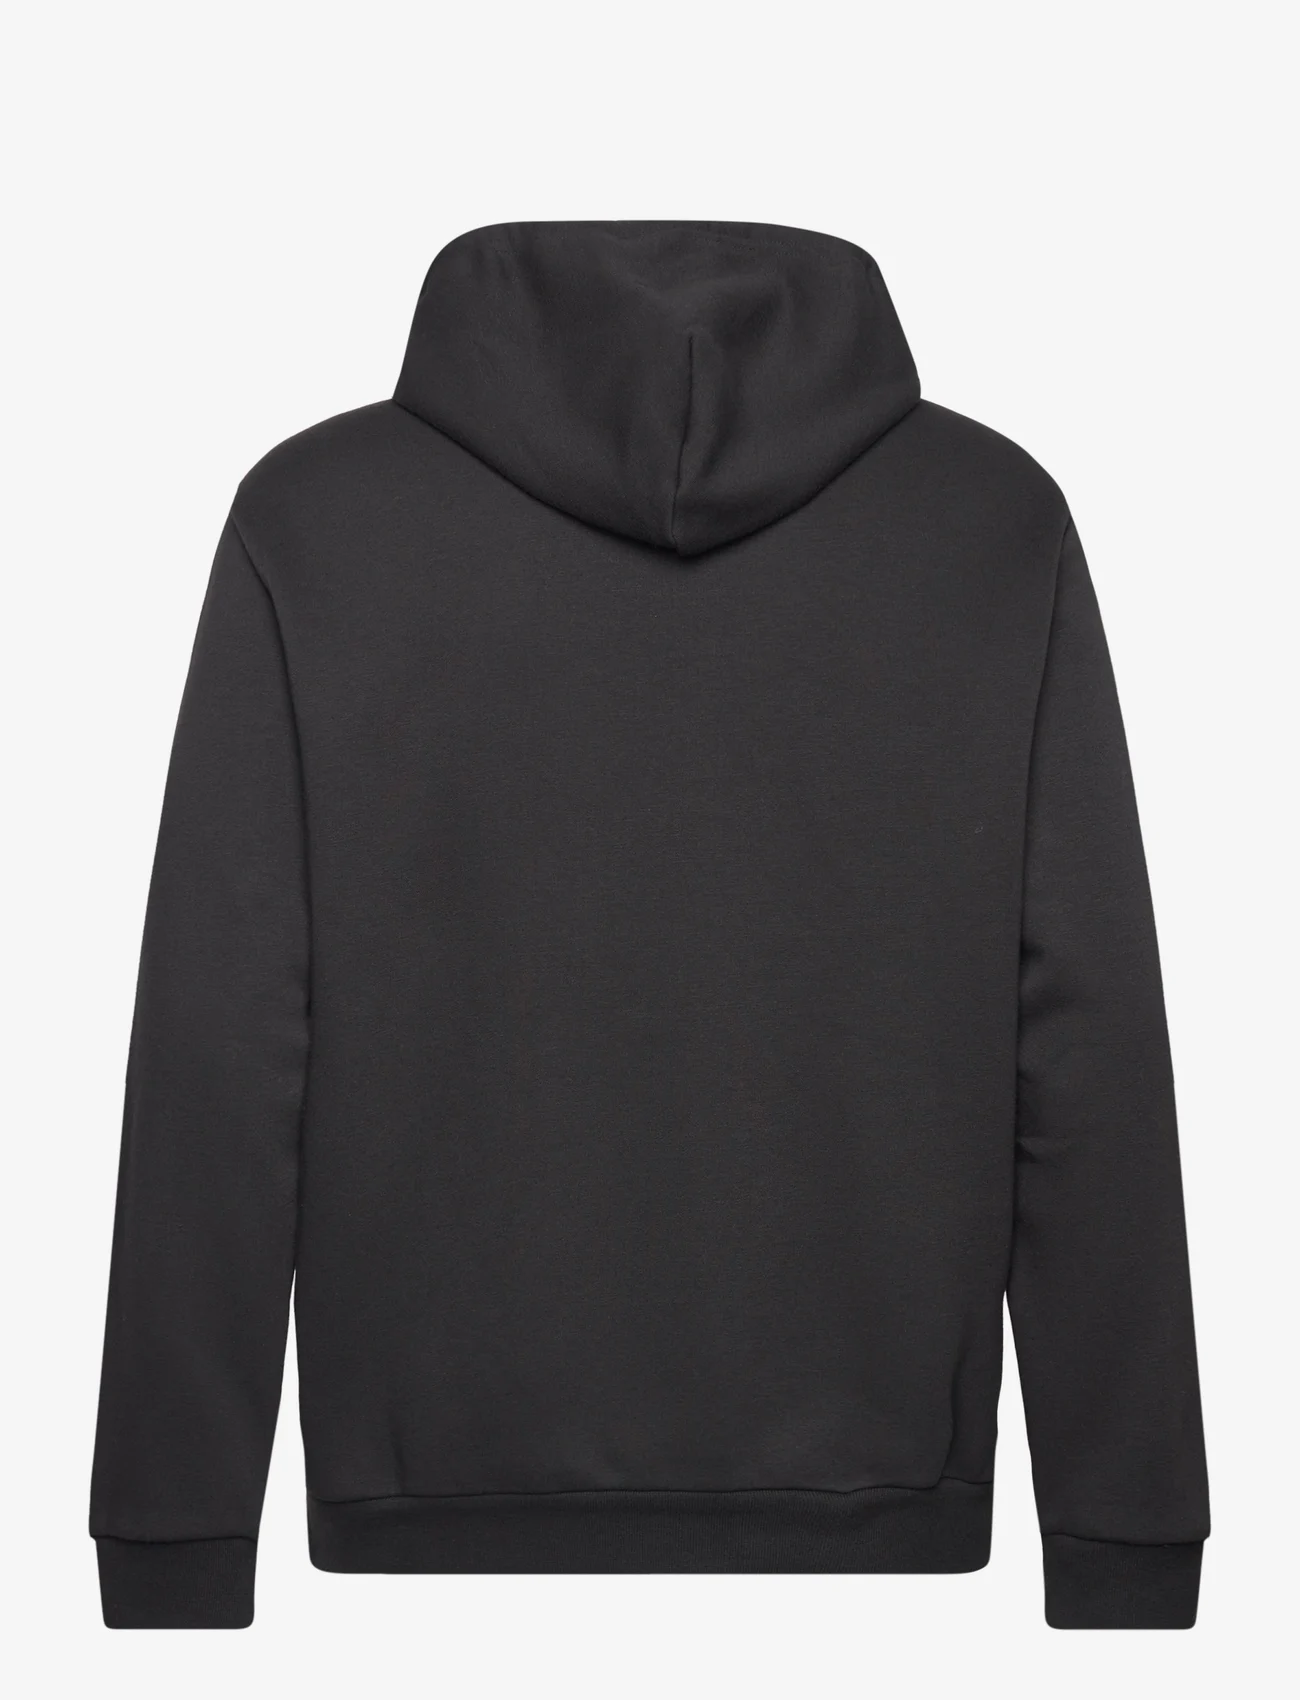 Champion - Hooded Sweatshirt - black beauty - 1